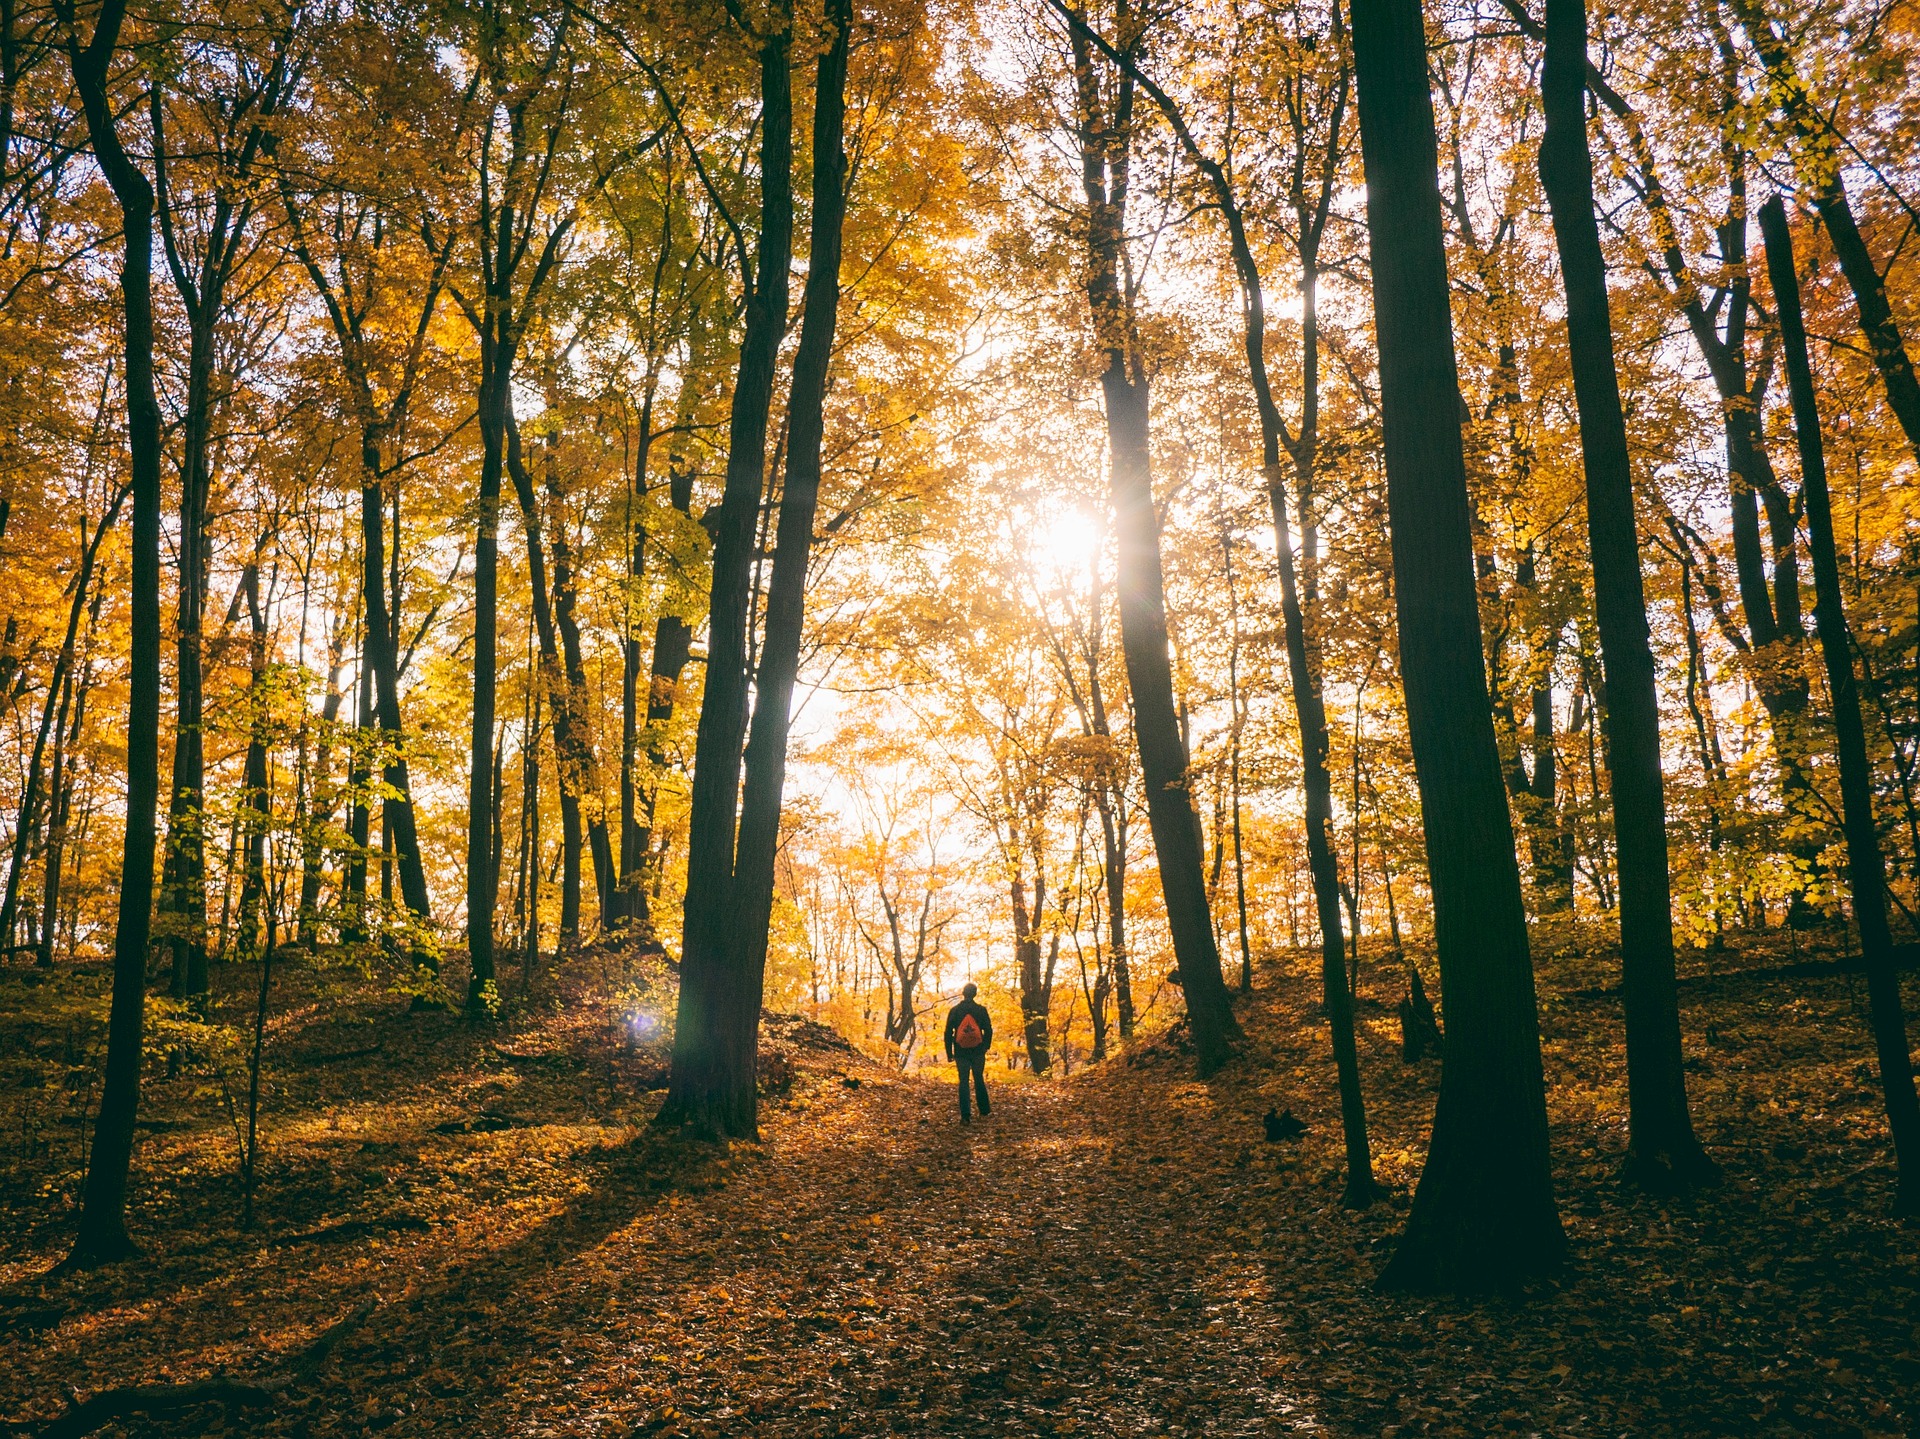 Trees-path-forest-man alone-walking-morning-autumn-sunlight